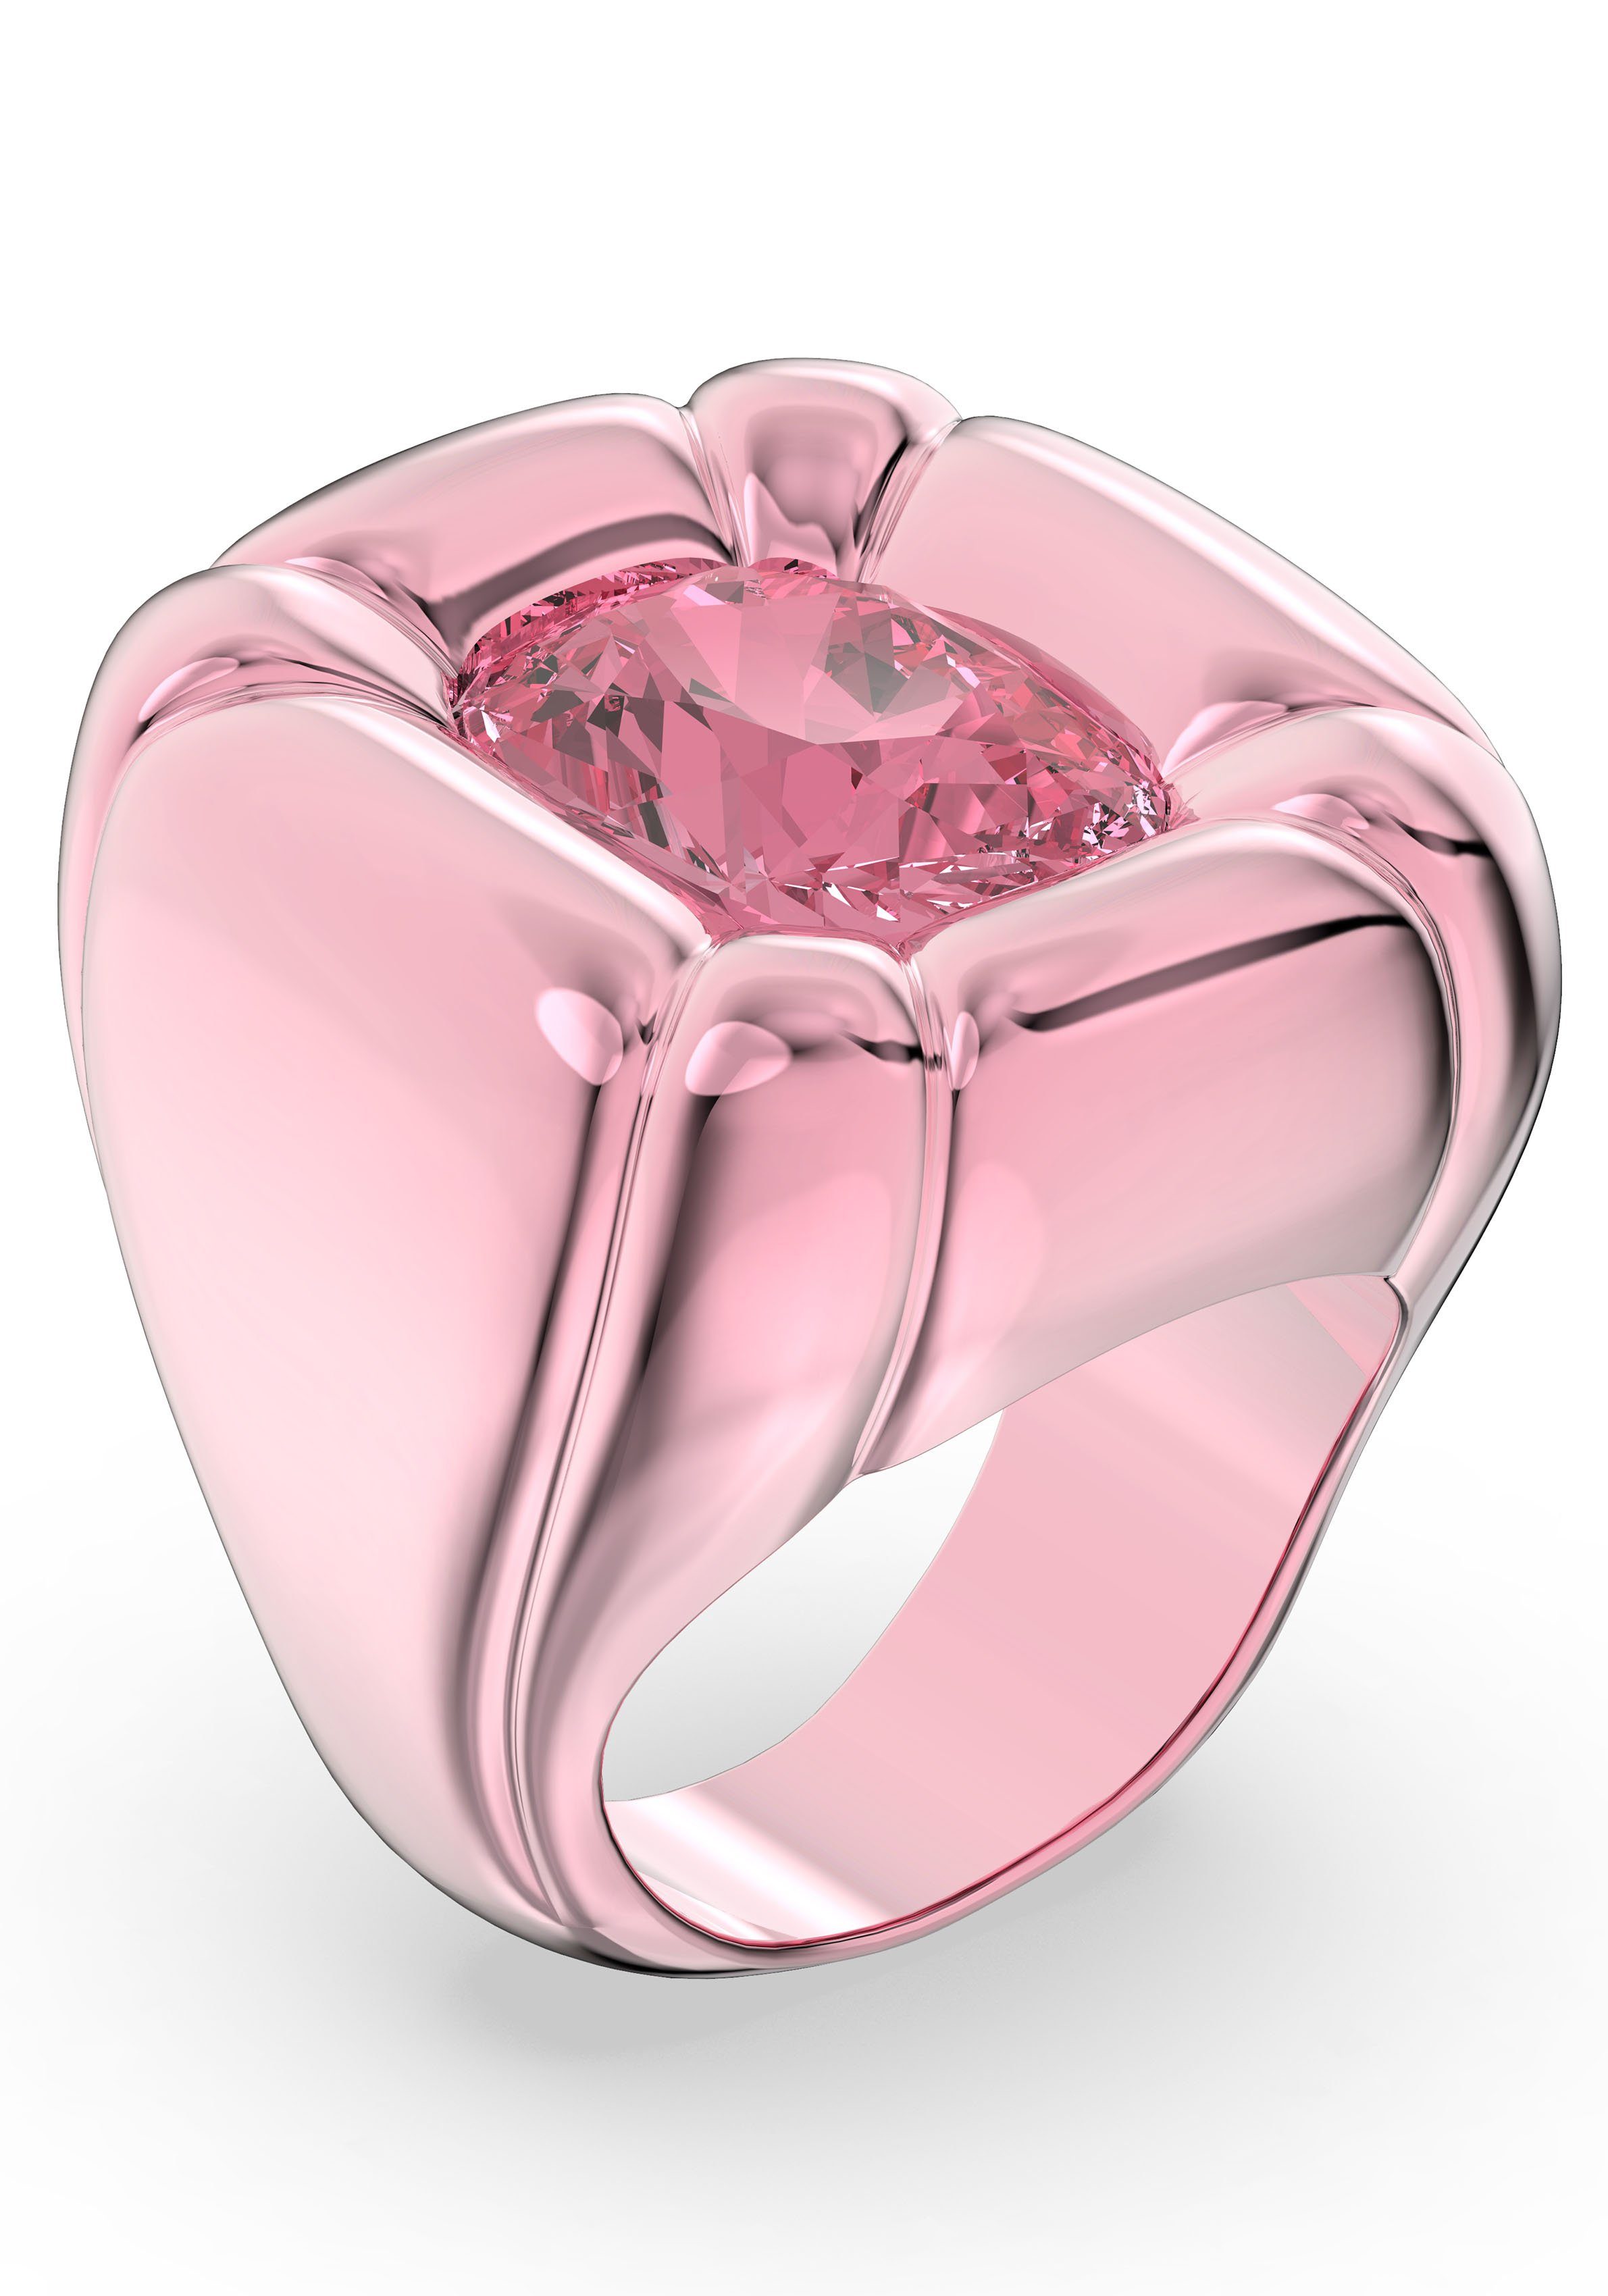 Swarovski Fingerring 5610803,5609721, Swarovski® Ring, mit Kristall rosa-pink 5610804,5609725, Cocktail Dulcis